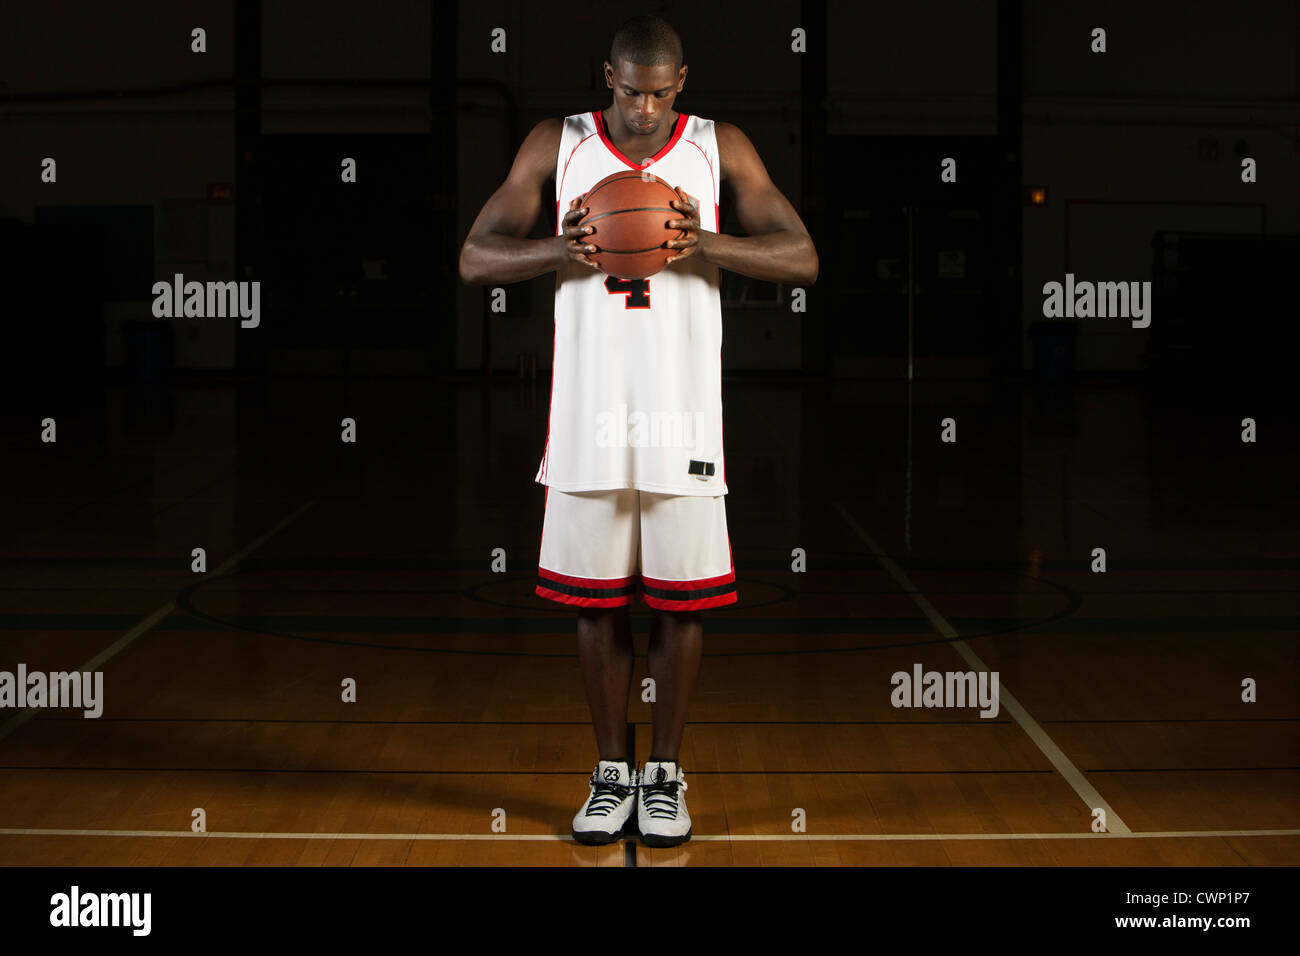 Basketball player holding basketball, portrait Stock Photo